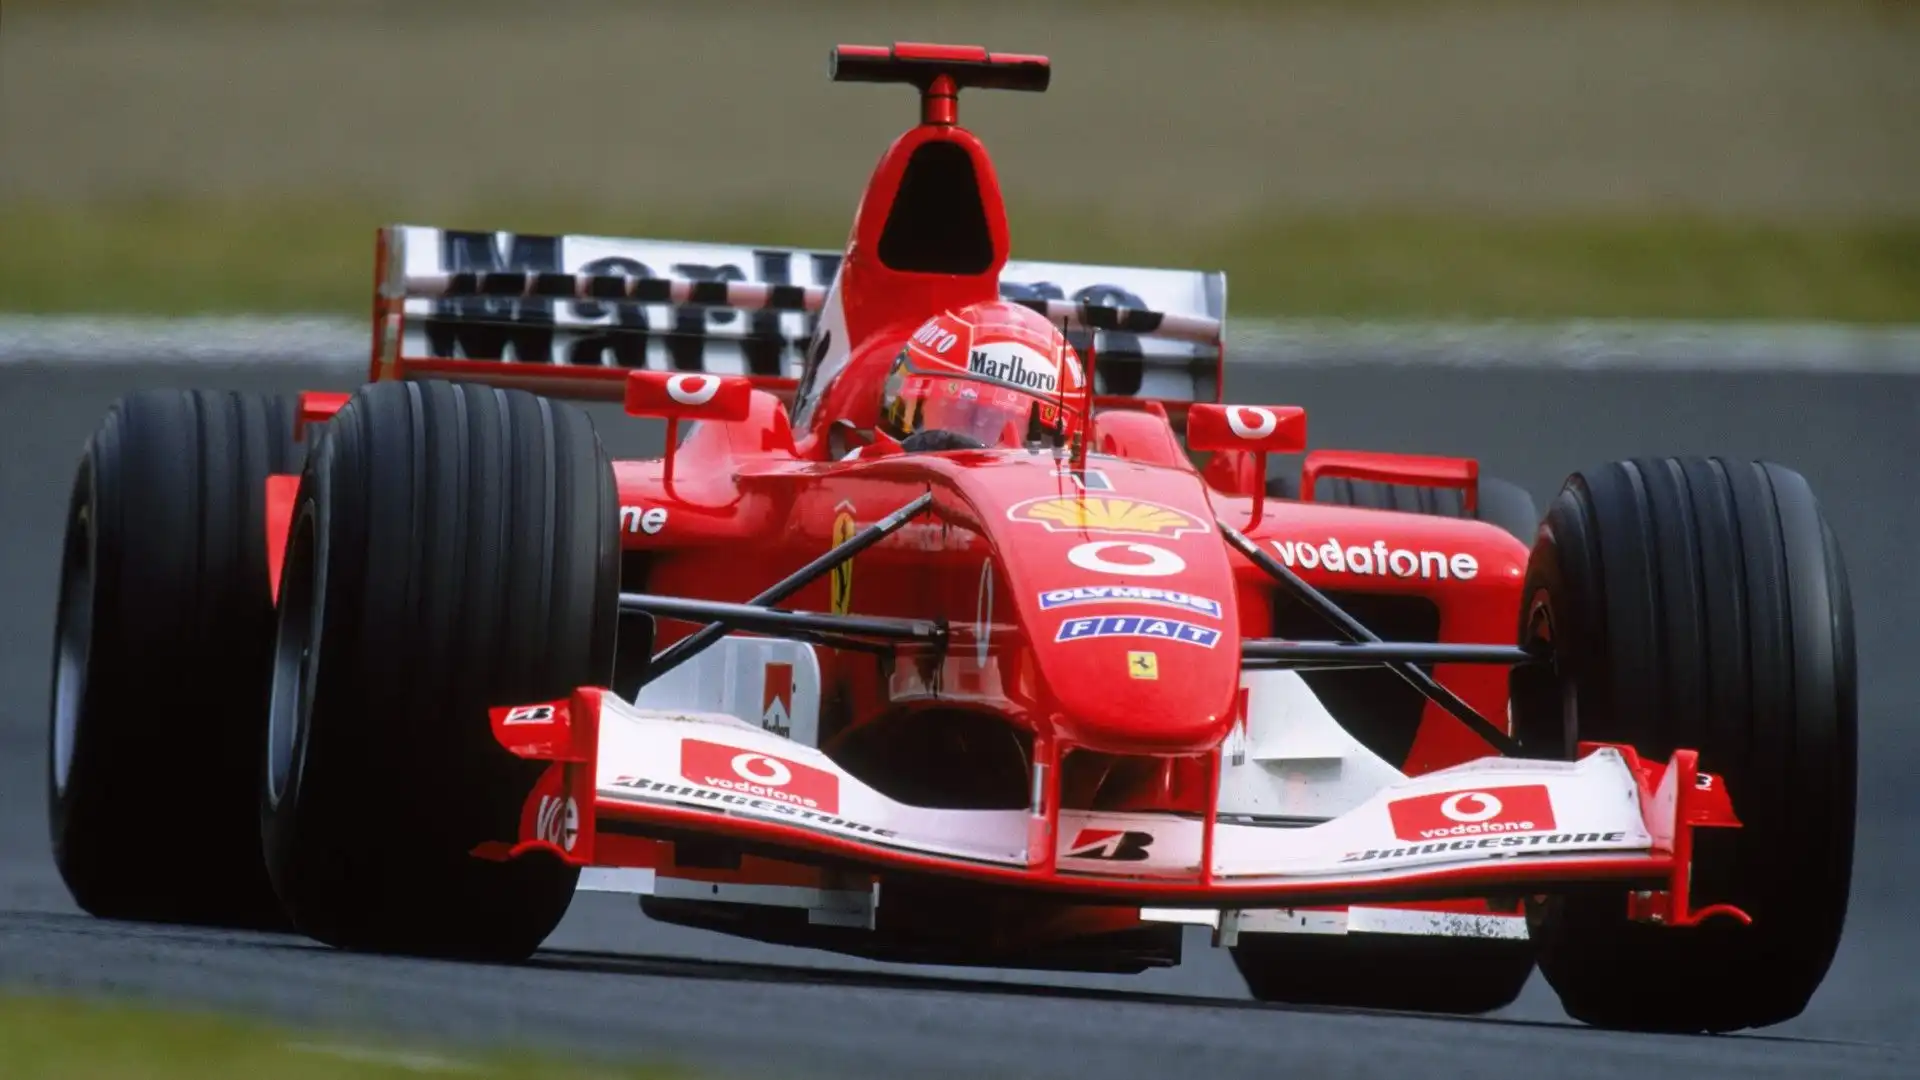 1- Michael Schumacher 77